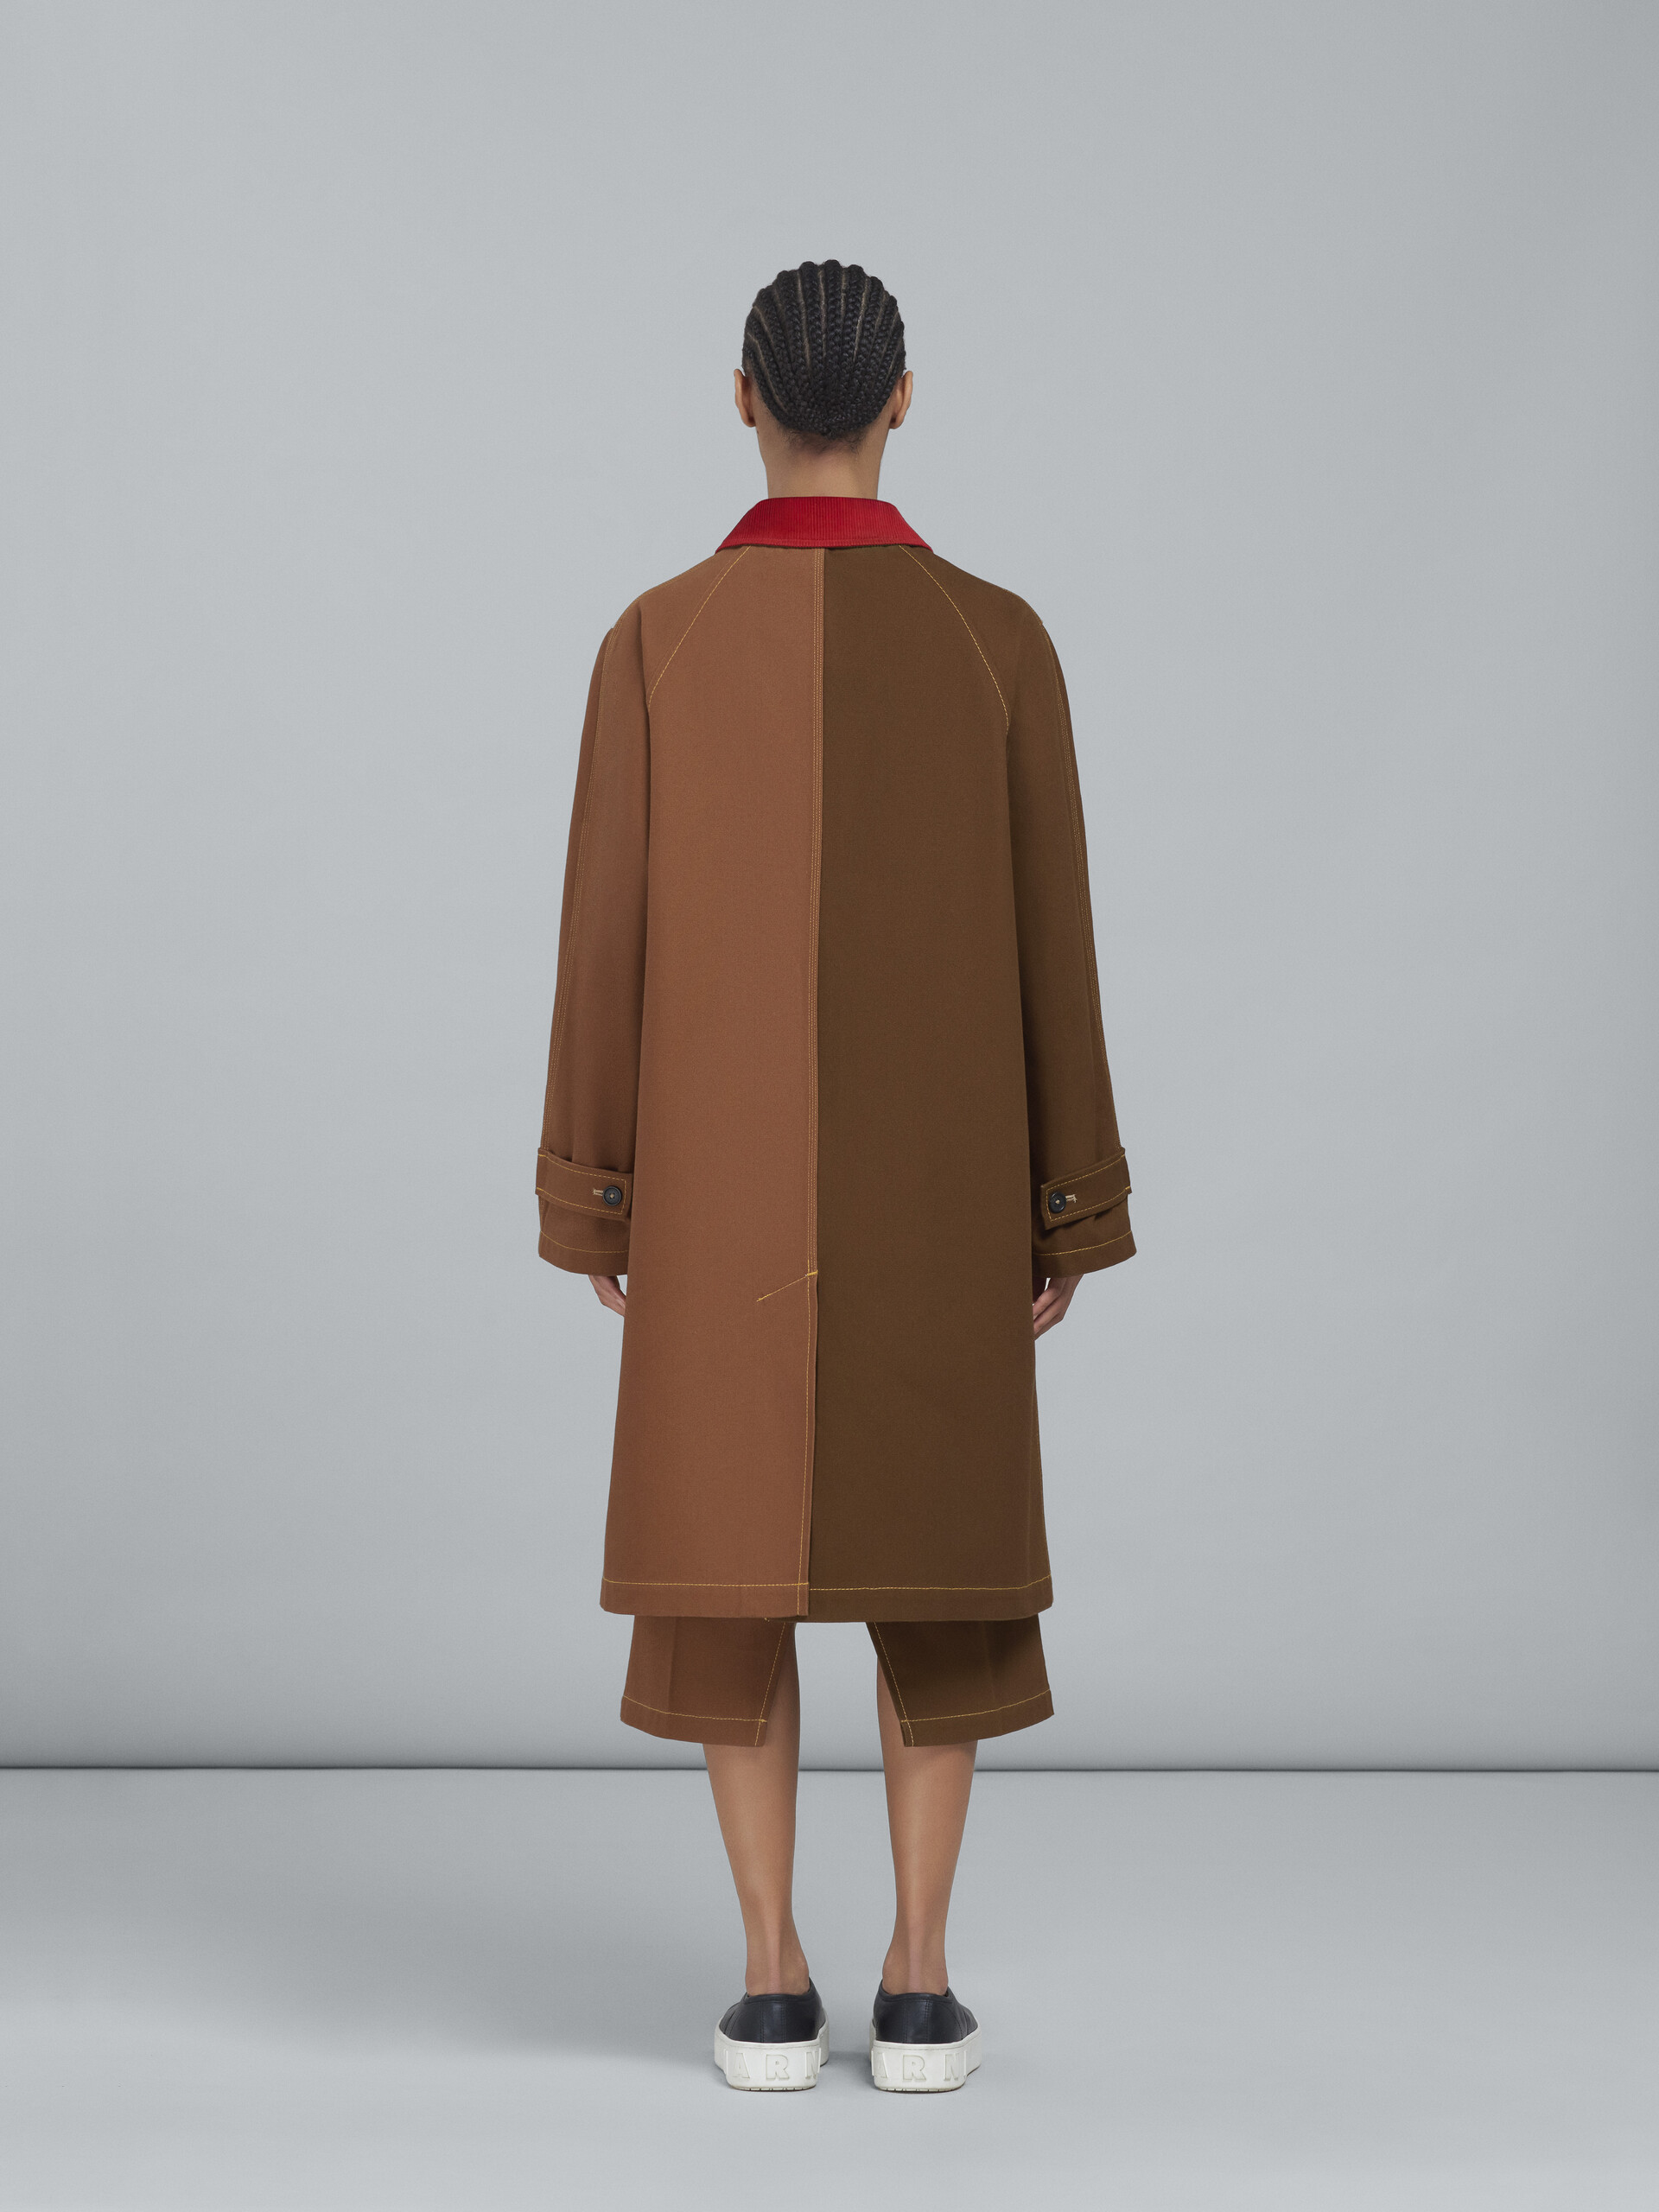 MARNI x CARHARTT WIP - brown colour-block coat - Coat - Image 3